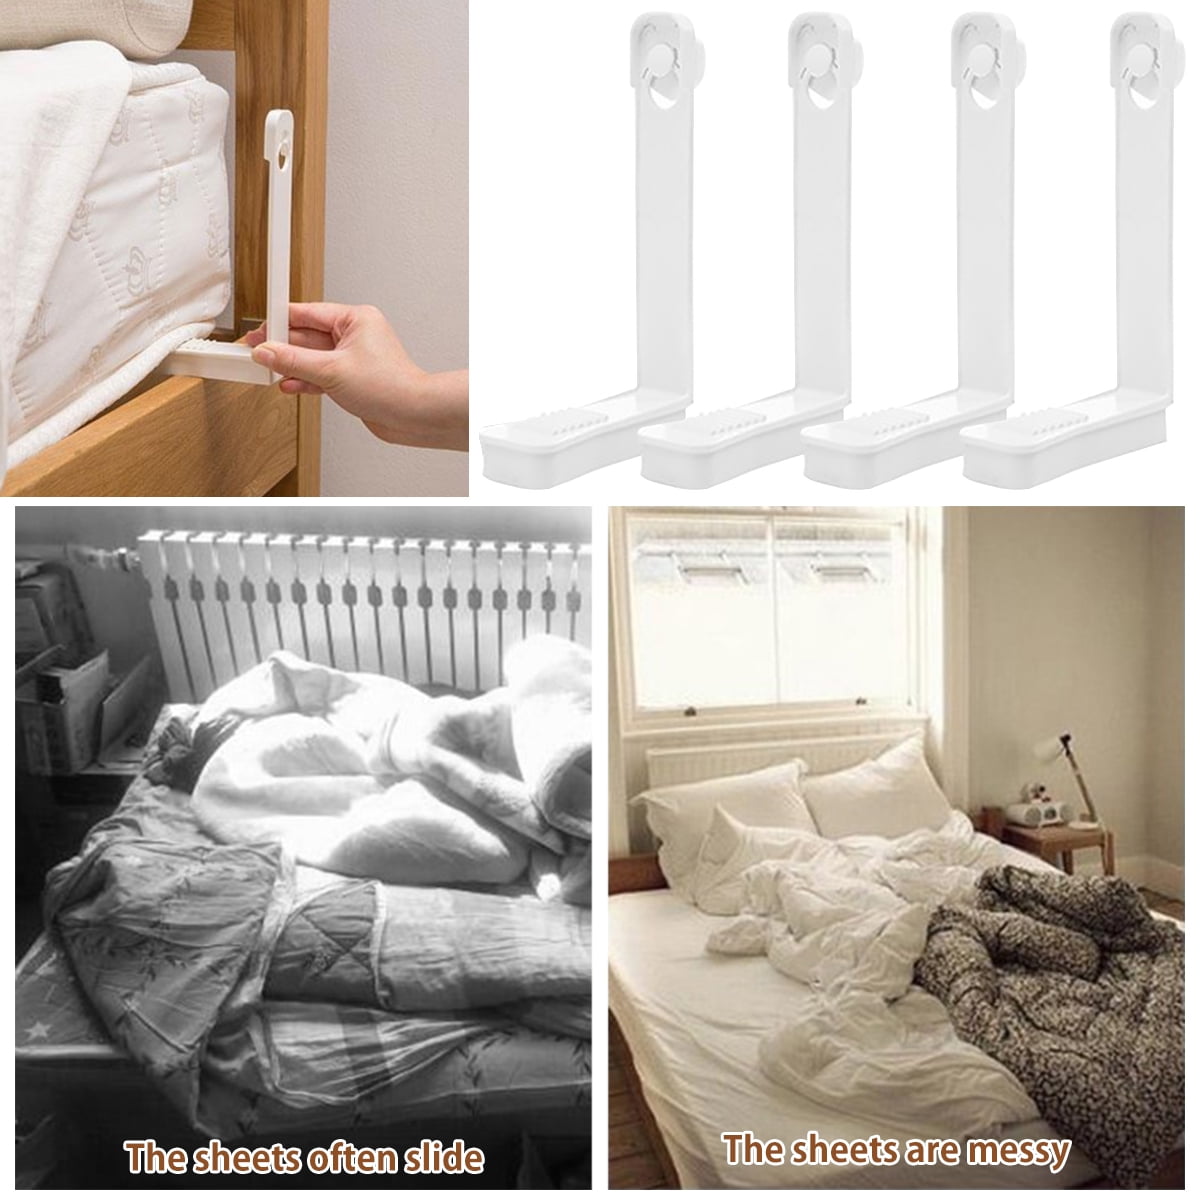 4Pcs Bed Sheet Clips Soft Bed Sheet Holder Non-Slip Holder